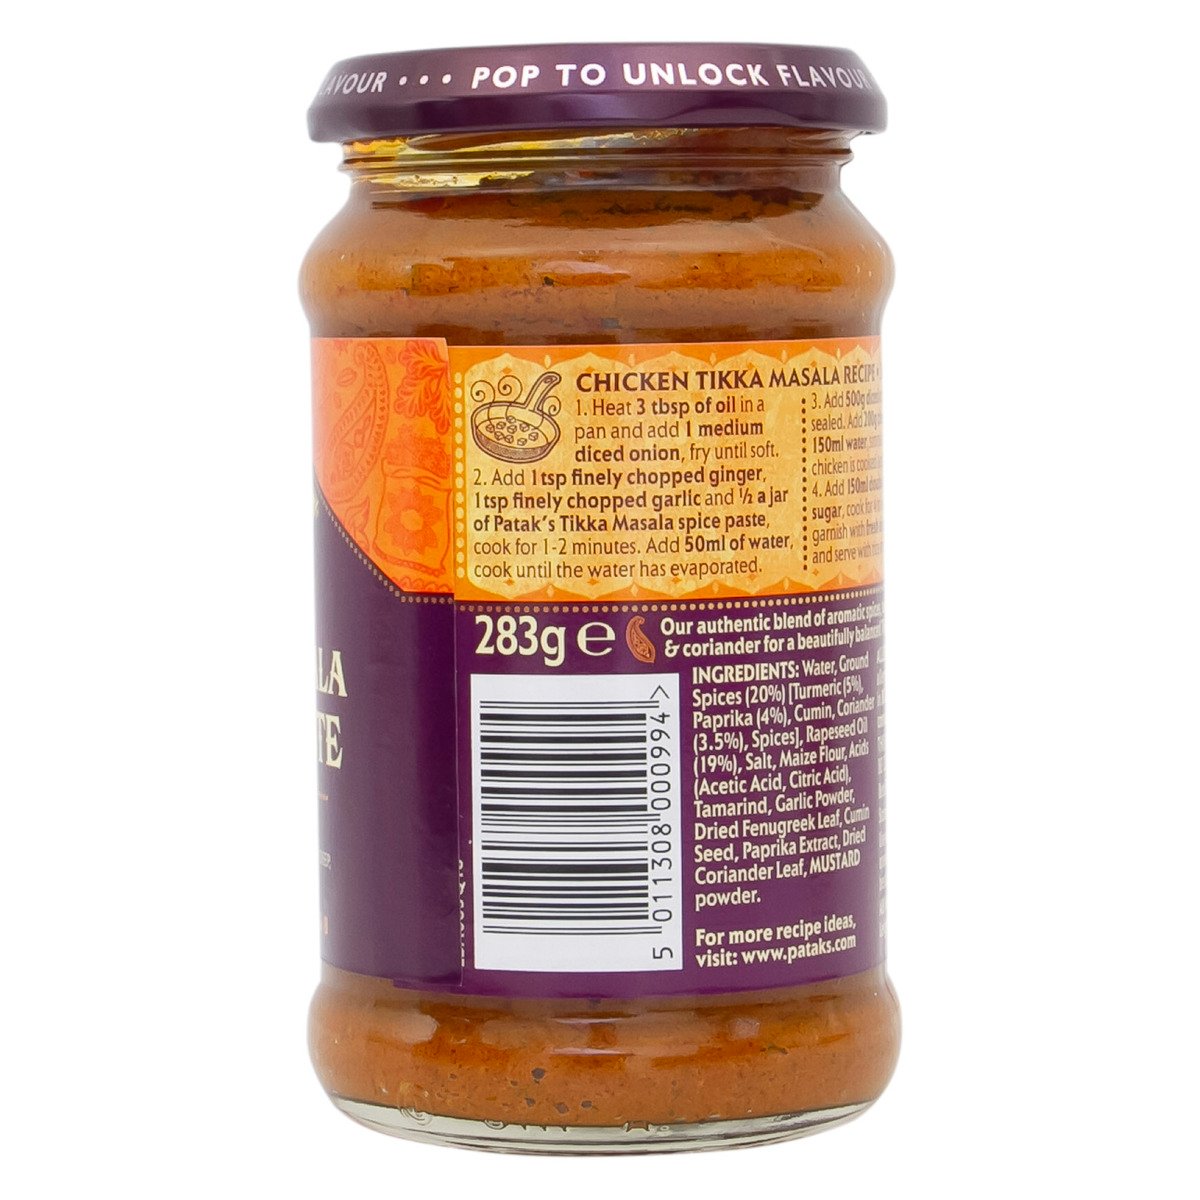 Patak's Tikka Masala Spice Paste 283 g